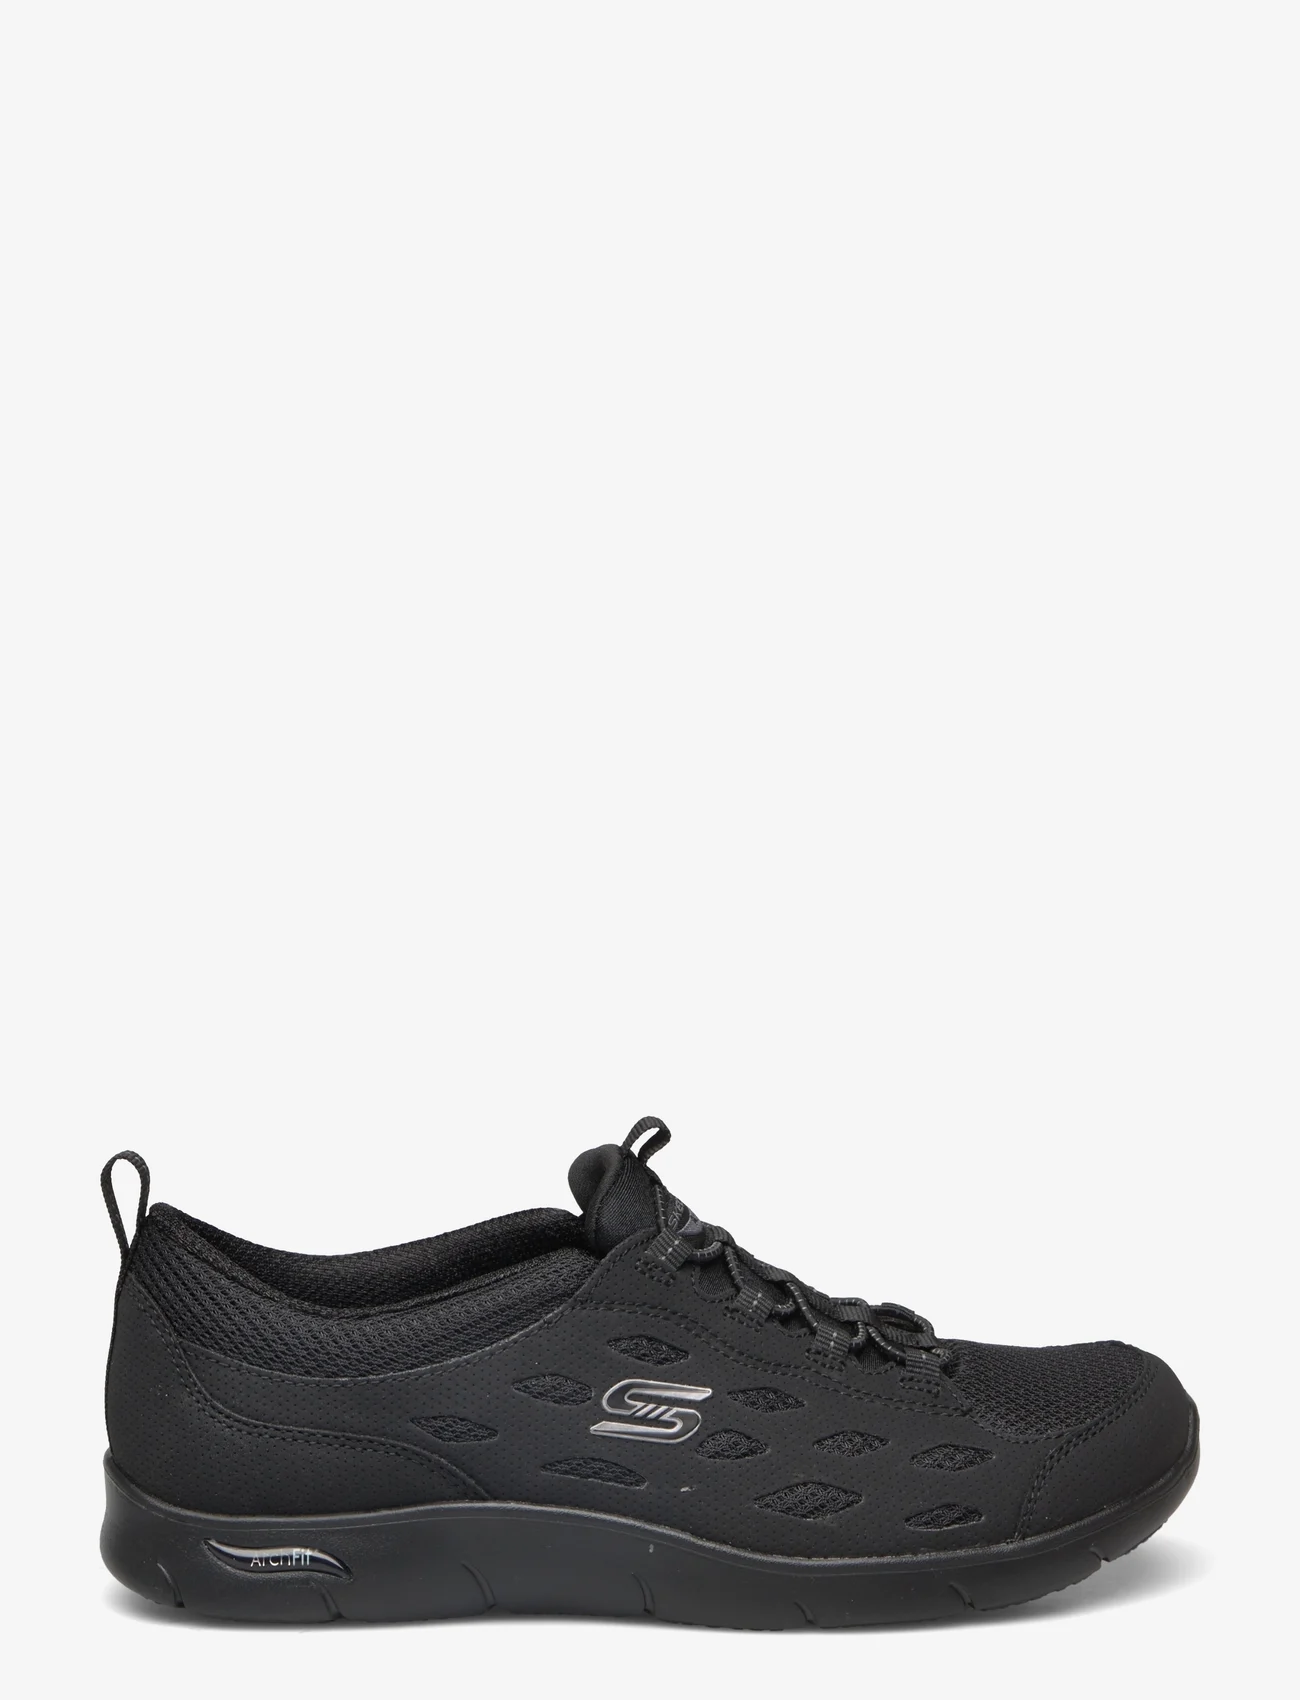 Skechers - Womens Arch Fit - Refine - sneakers med lavt skaft - bbk black - 1